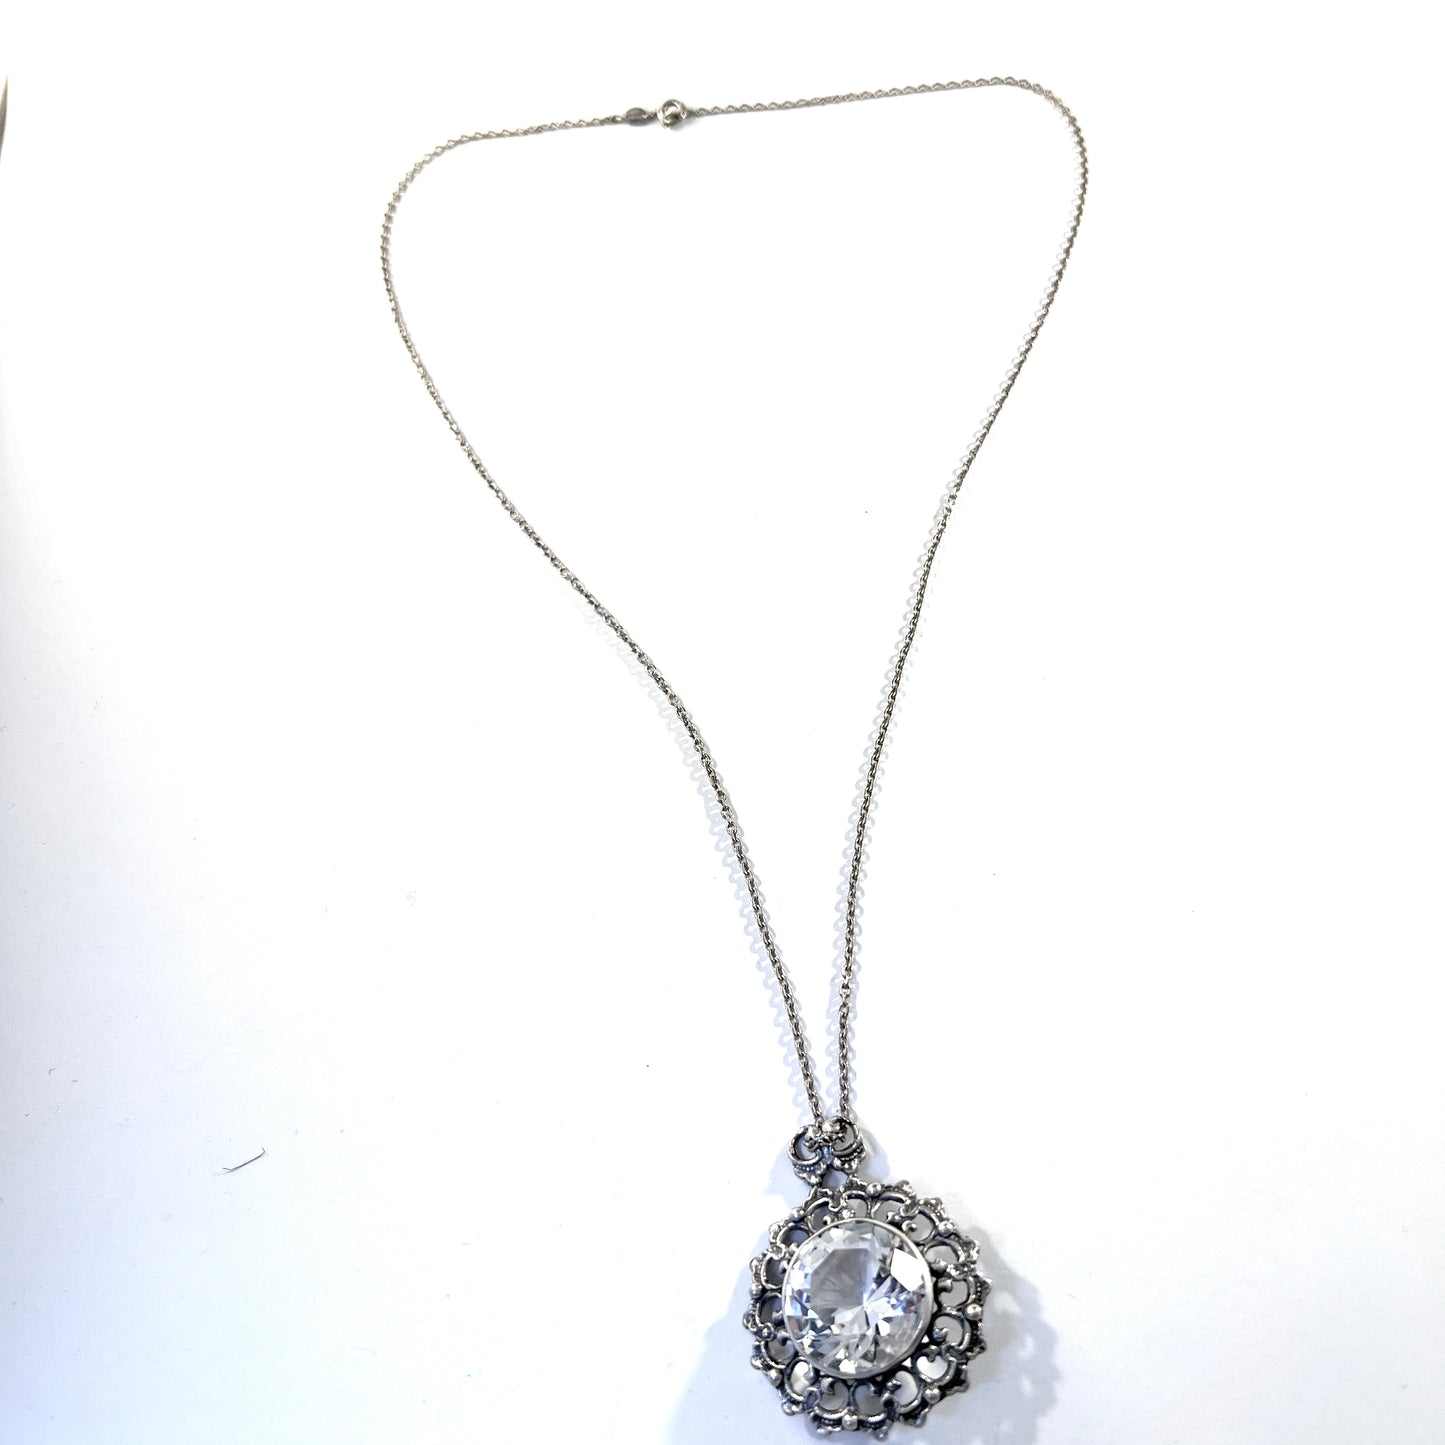 Urpo Hakala, Finland 1970s. Vintage Solid Silver Large Rock Crystal Pendant Necklace.